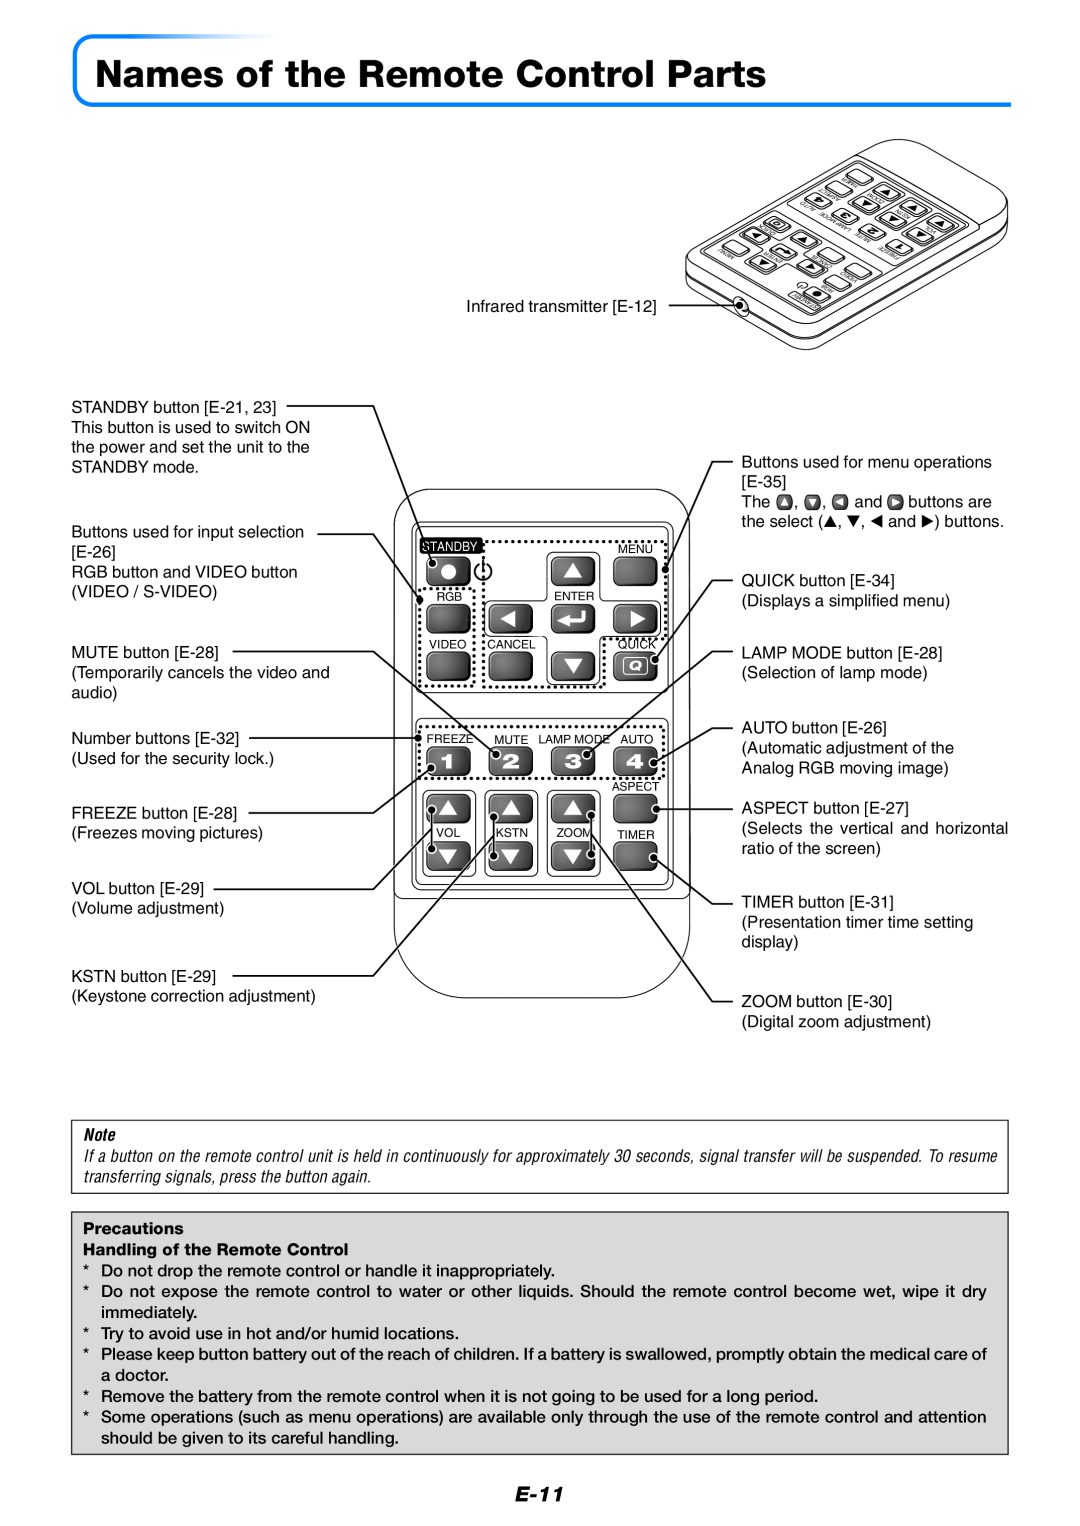 Mitsubishi Electronics XD60U Names of the Remote Control Parts, E-11, Precautions Handling of the Remote Control 